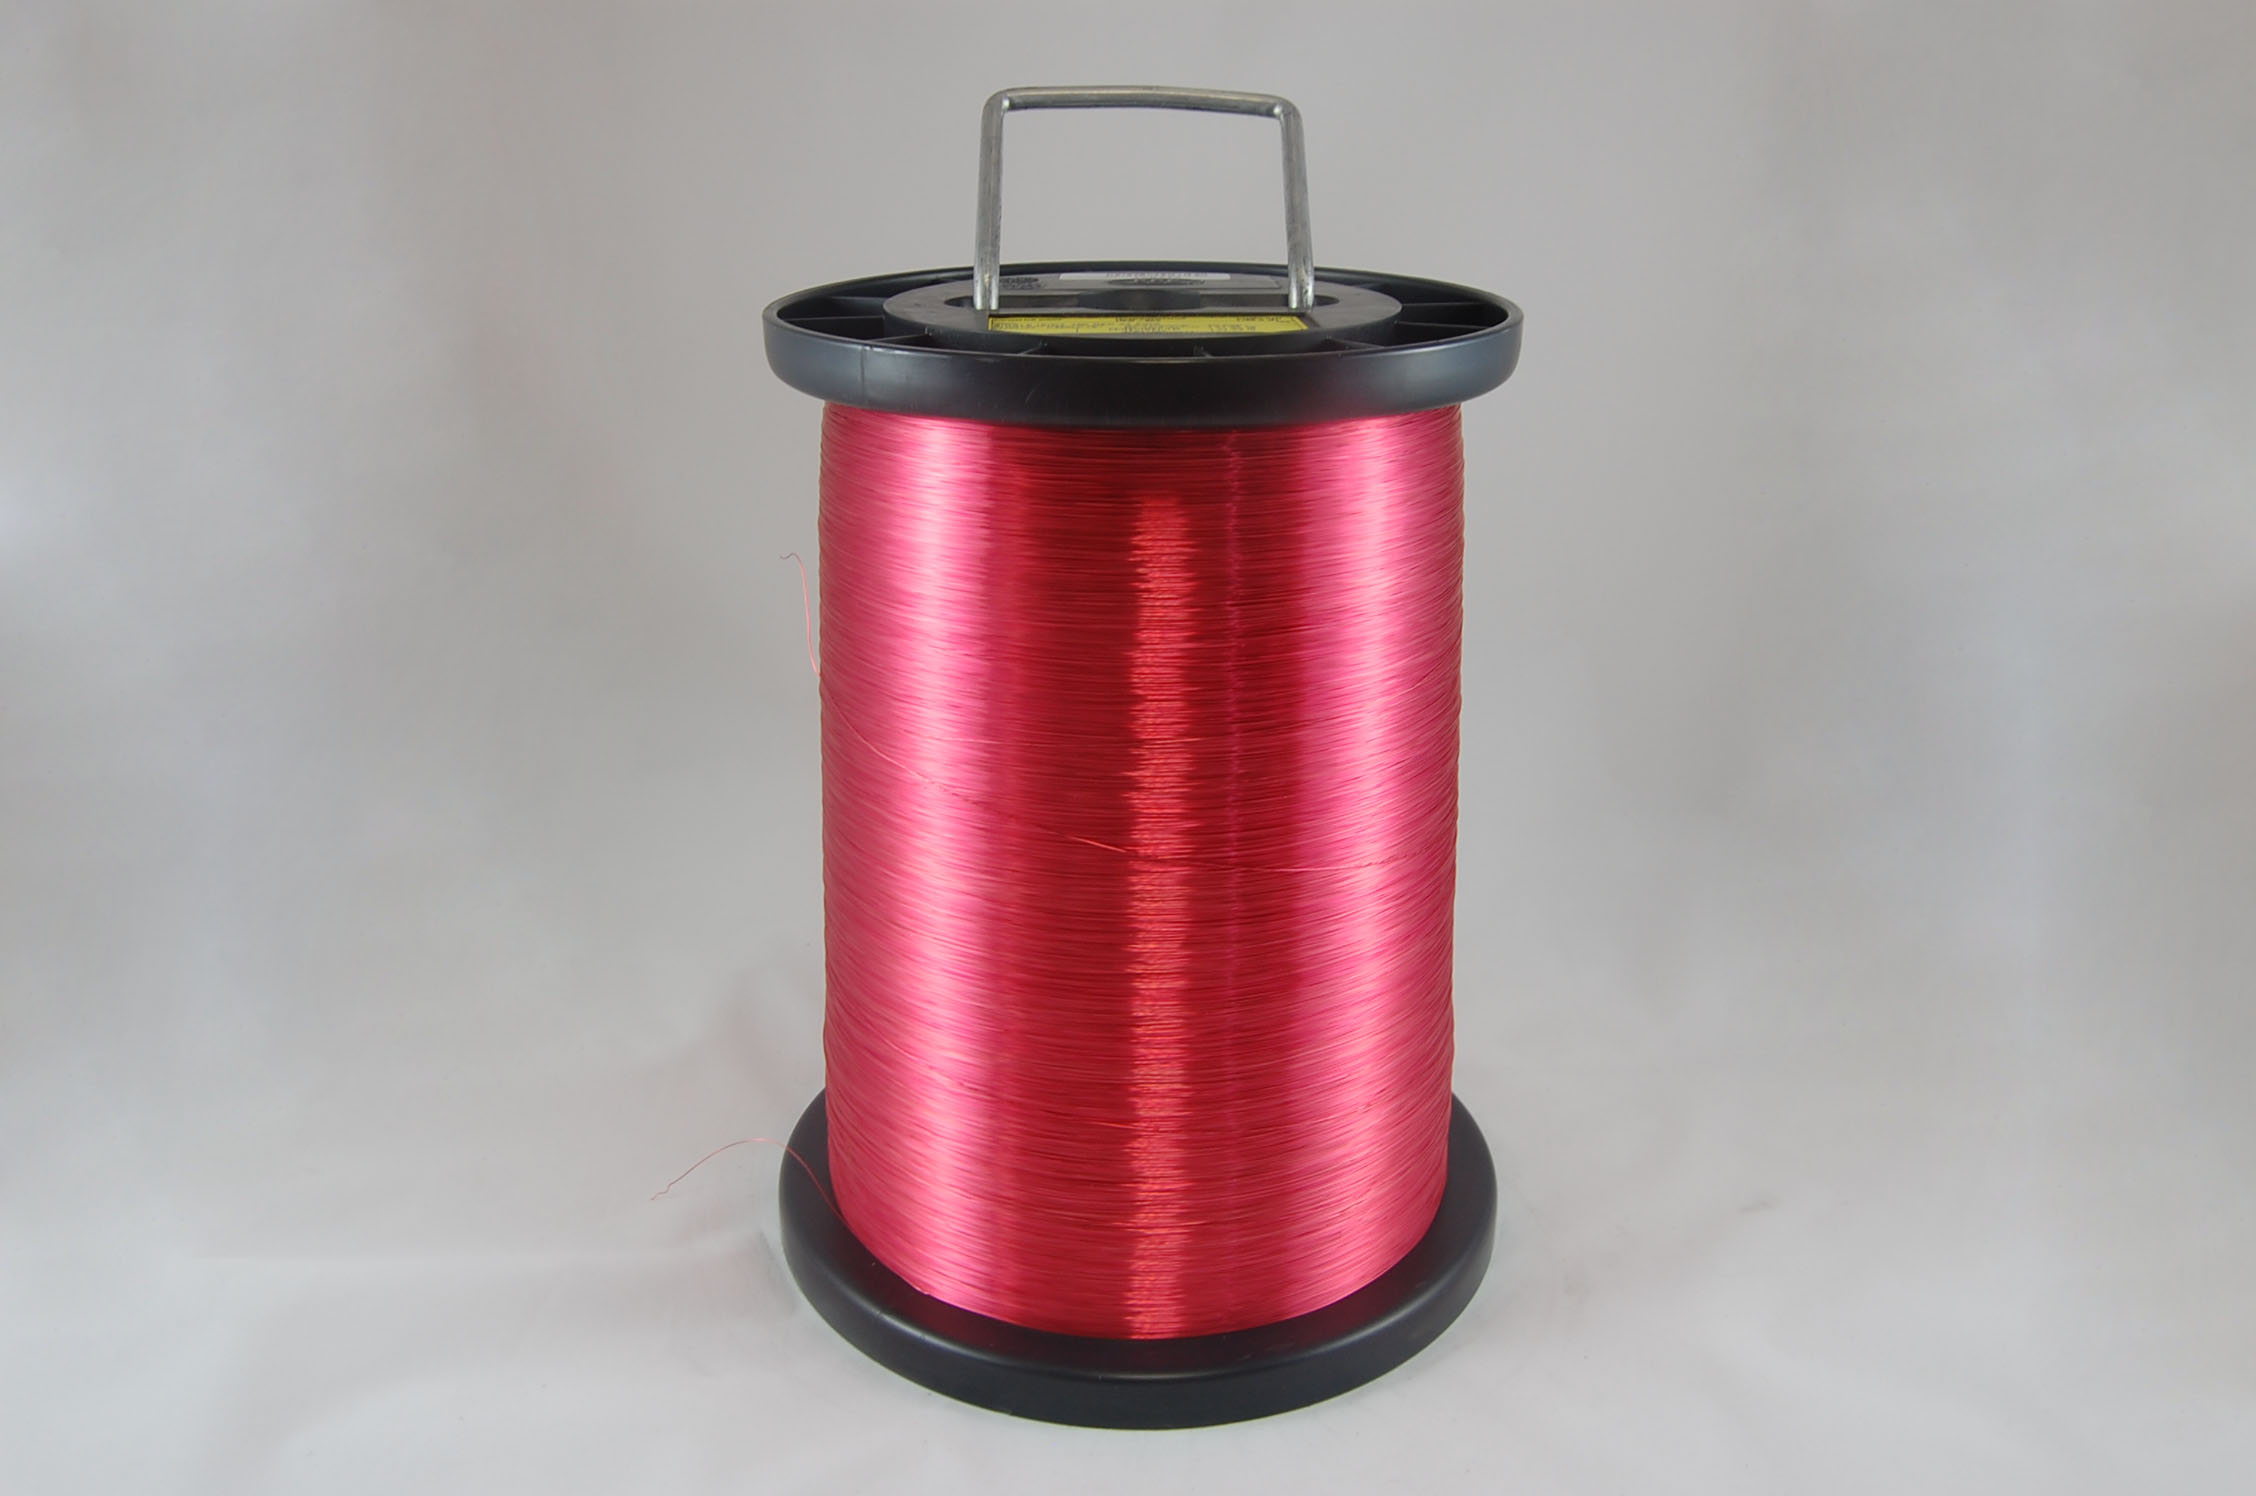 #14 Heavy INVEMID 200 Round MW 35 Copper Magnet Wire 200°C, copper, 45 LB half pack pail (average wght.)